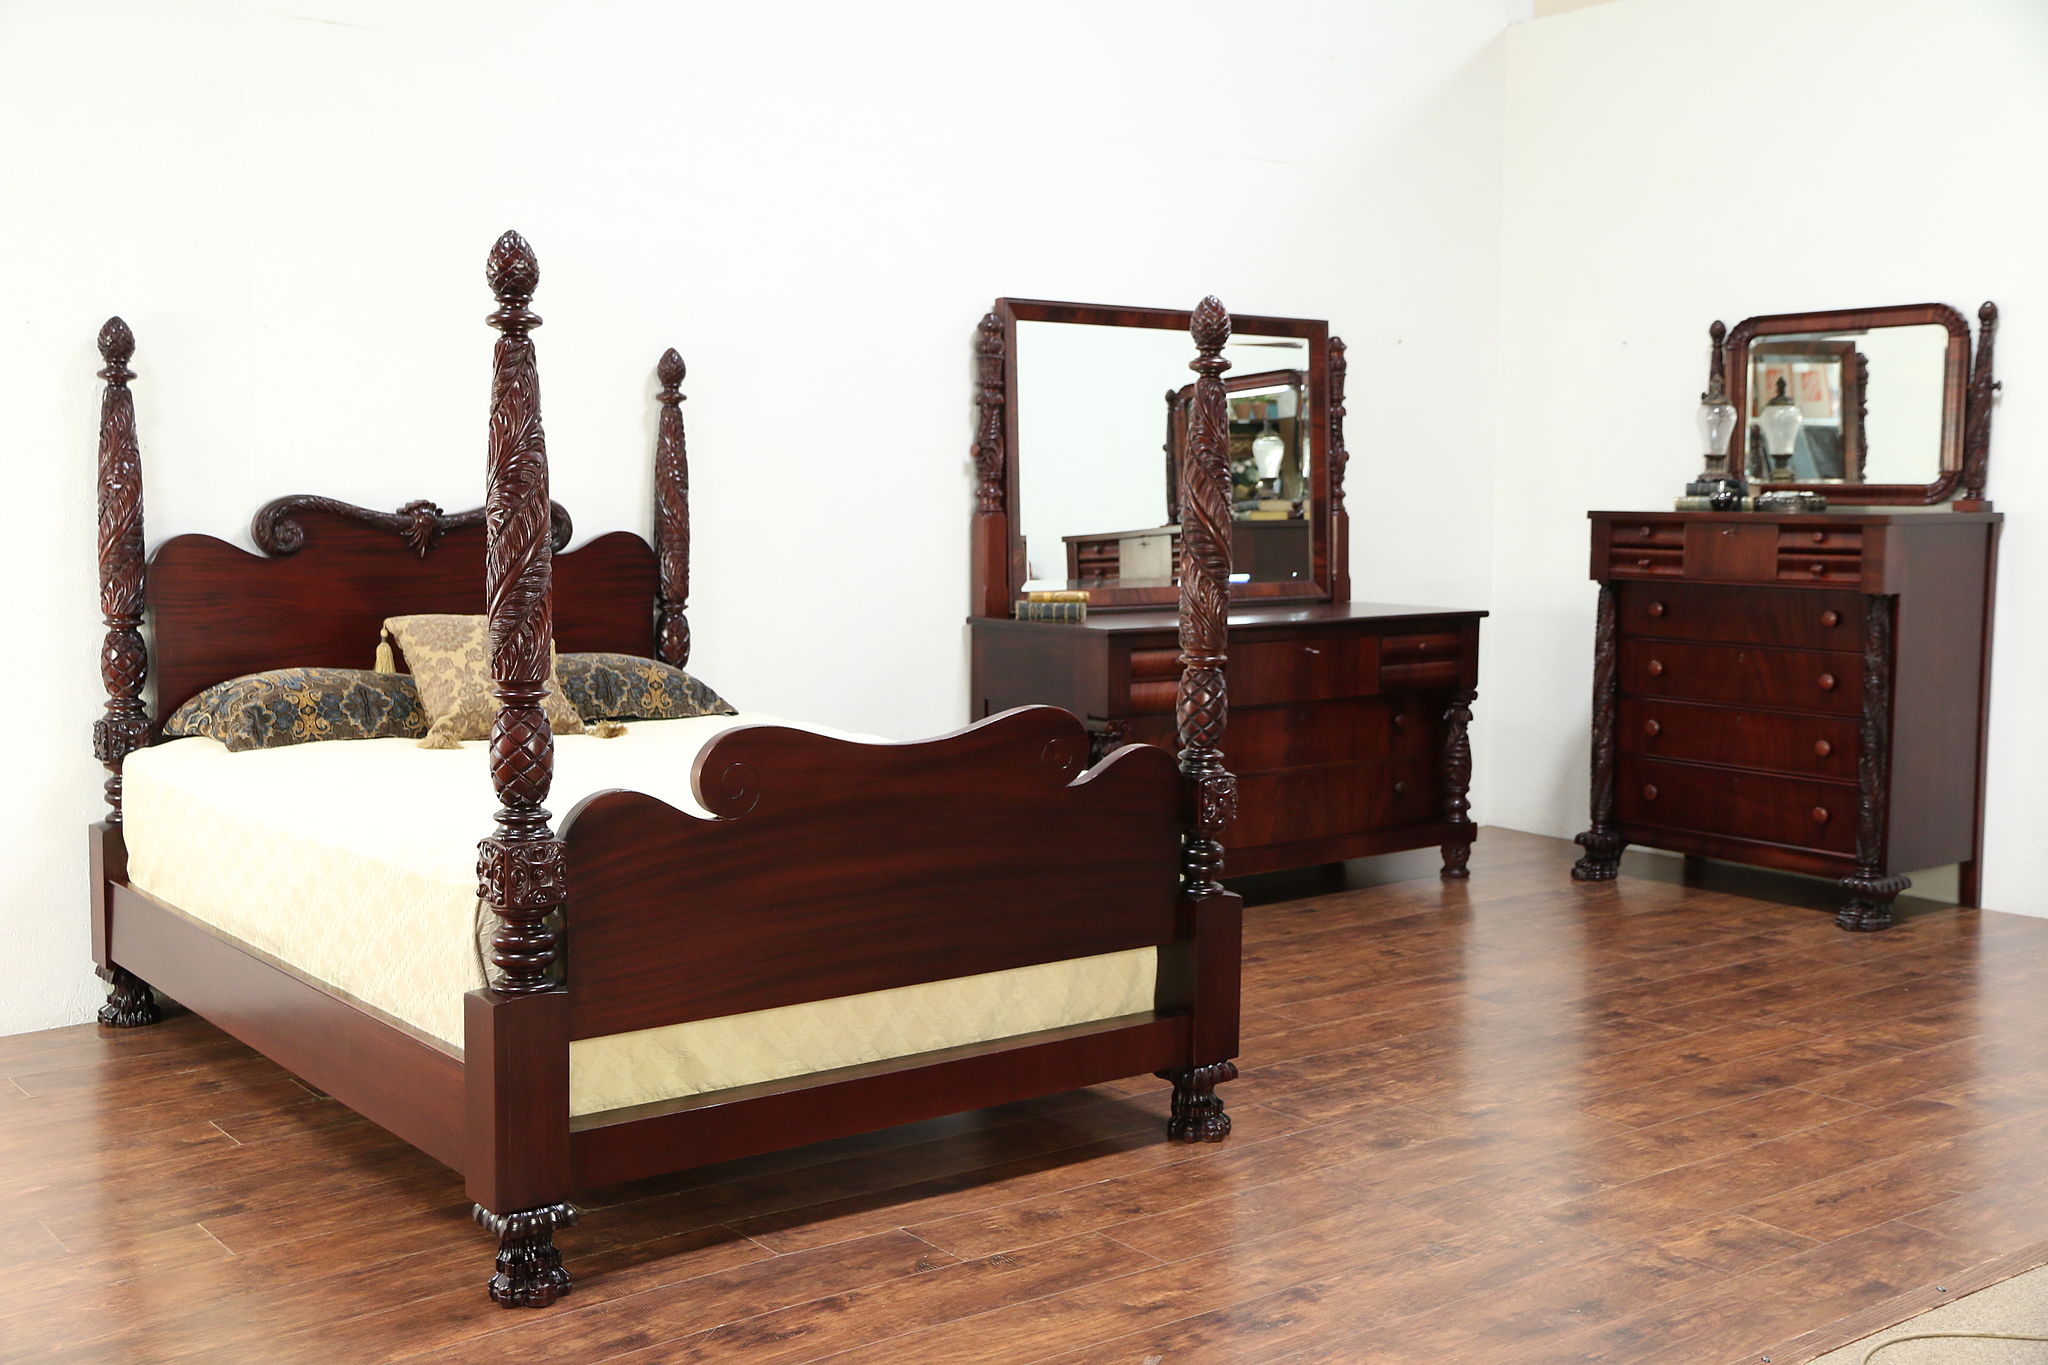 1960's mahogany bedroom furniture